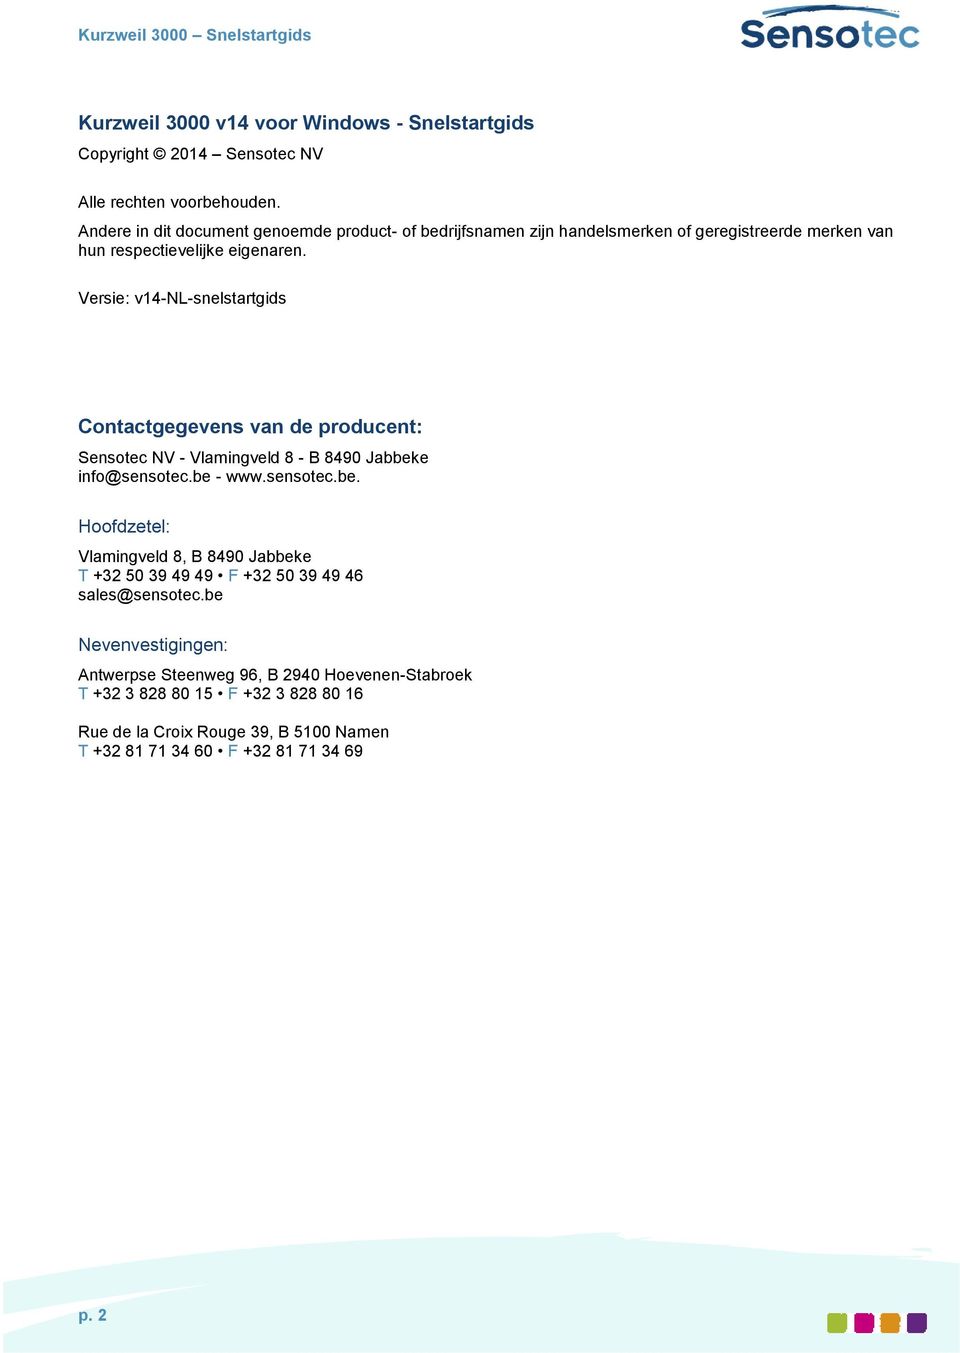 Versie: v14-nl-snelstartgids Contactgegevens van de producent: Sensotec NV - Vlamingveld 8 - B 8490 Jabbek